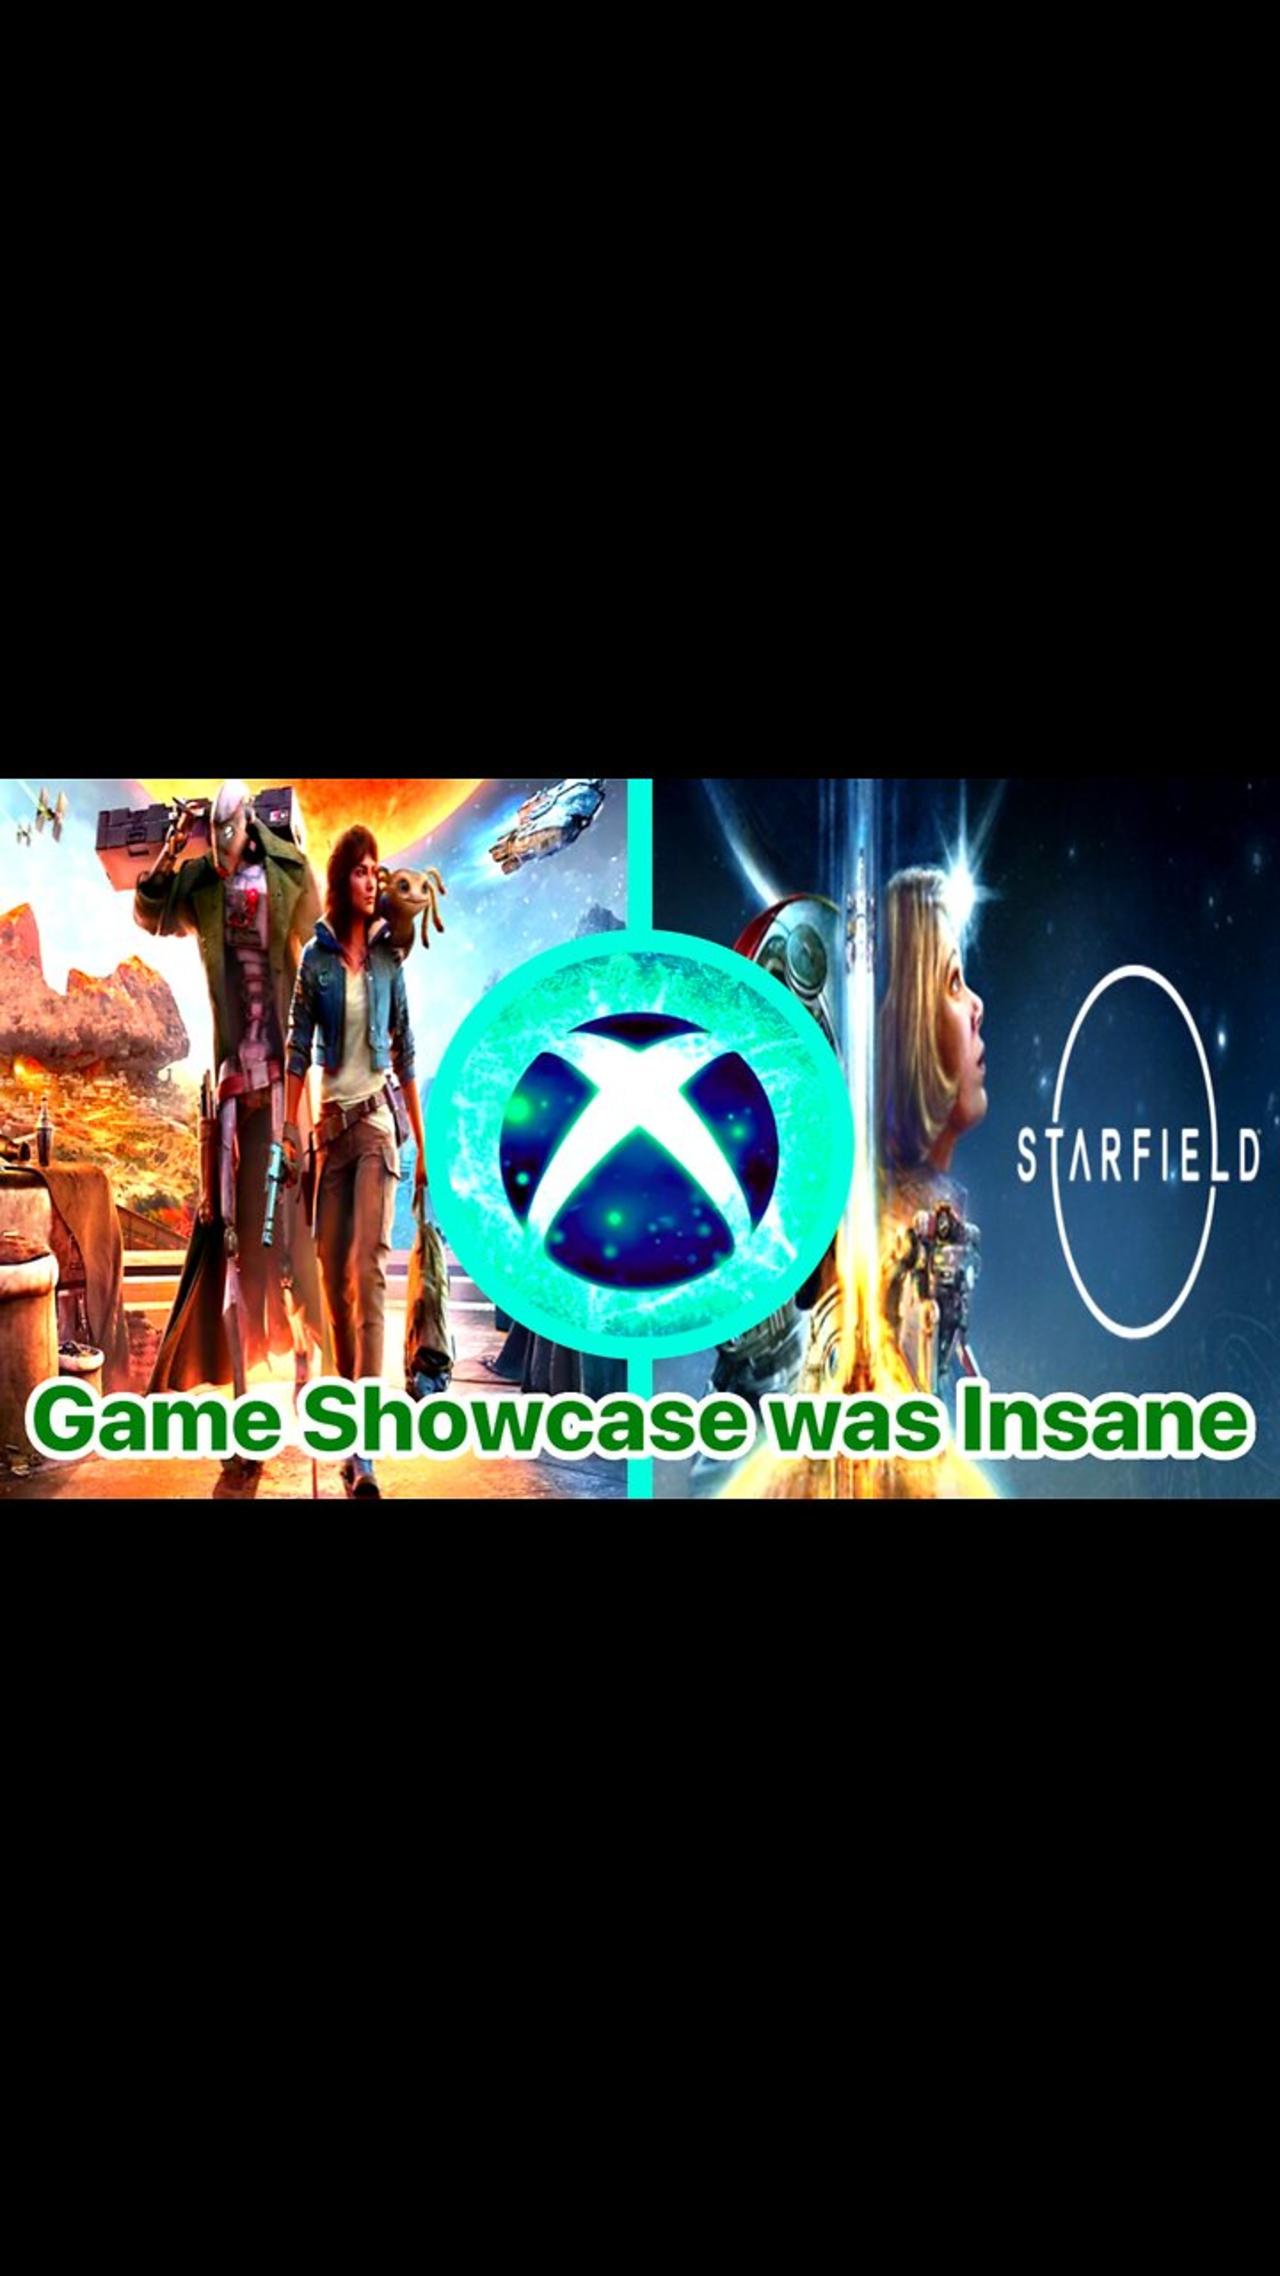 THE XBOX GAMES SHOWCASE WAS INSANE!!